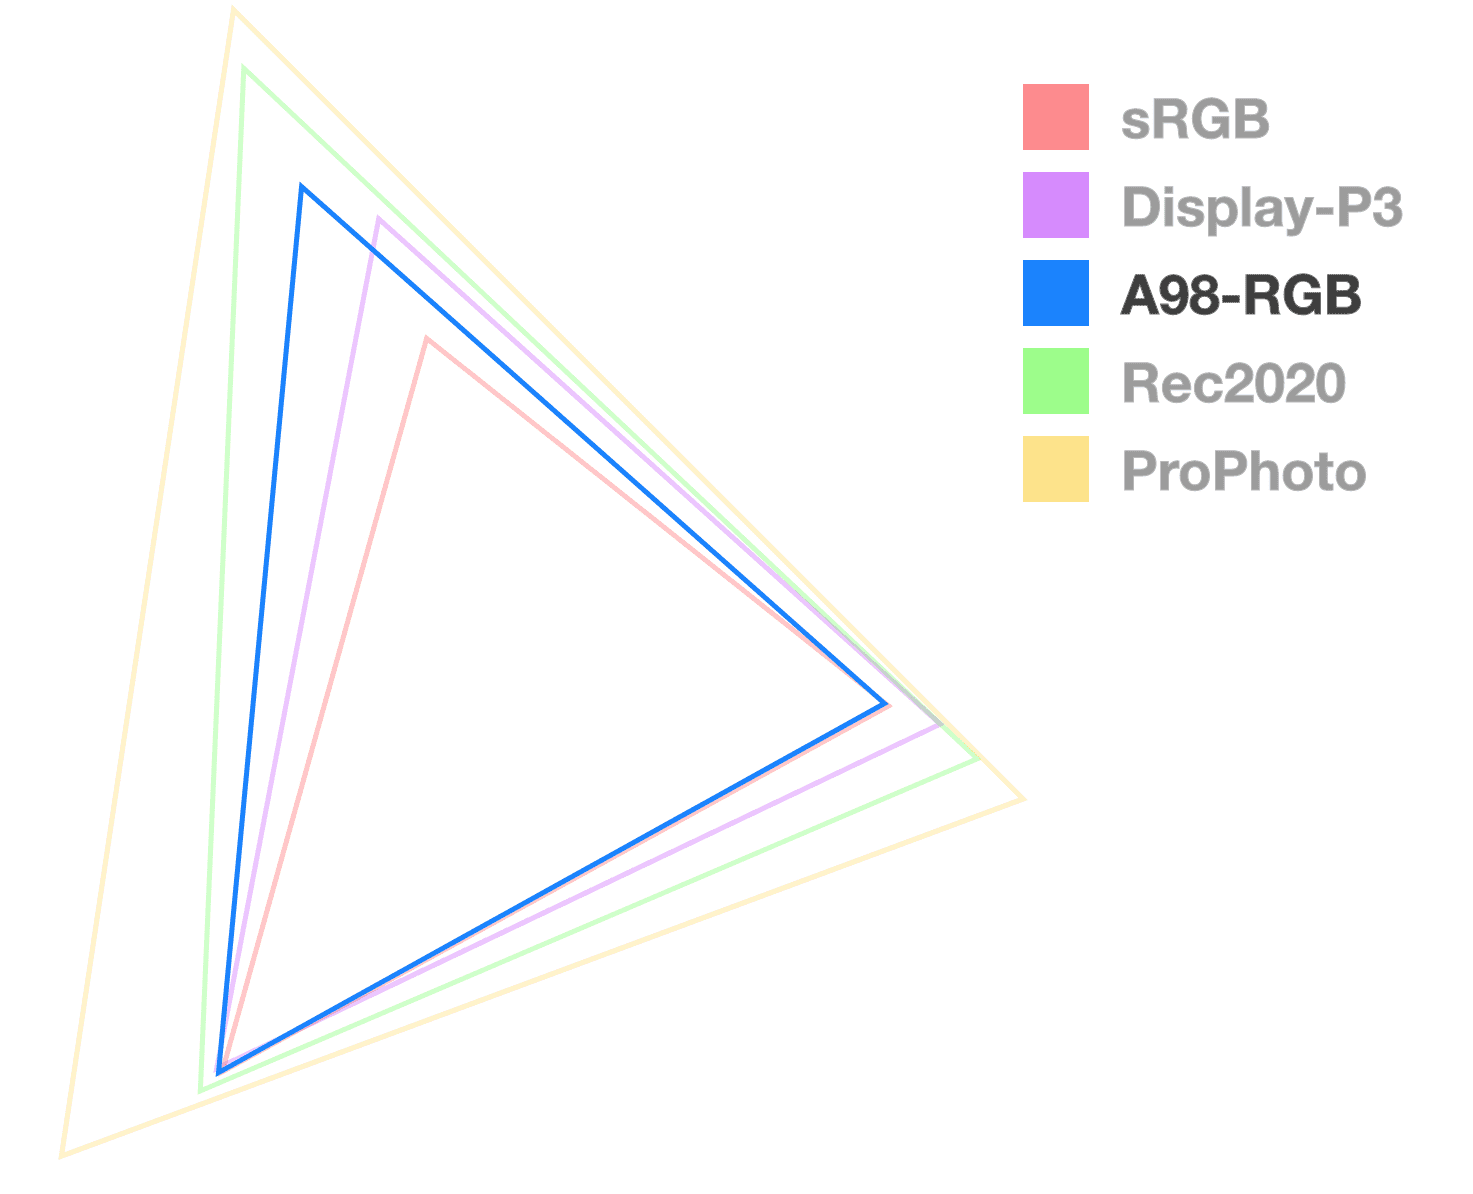 Segitiga A98 adalah satu-satunya gambar yang sepenuhnya buram, untuk membantu memvisualisasikan ukuran gamut. Ikon ini terlihat seperti segitiga ukuran tengah.